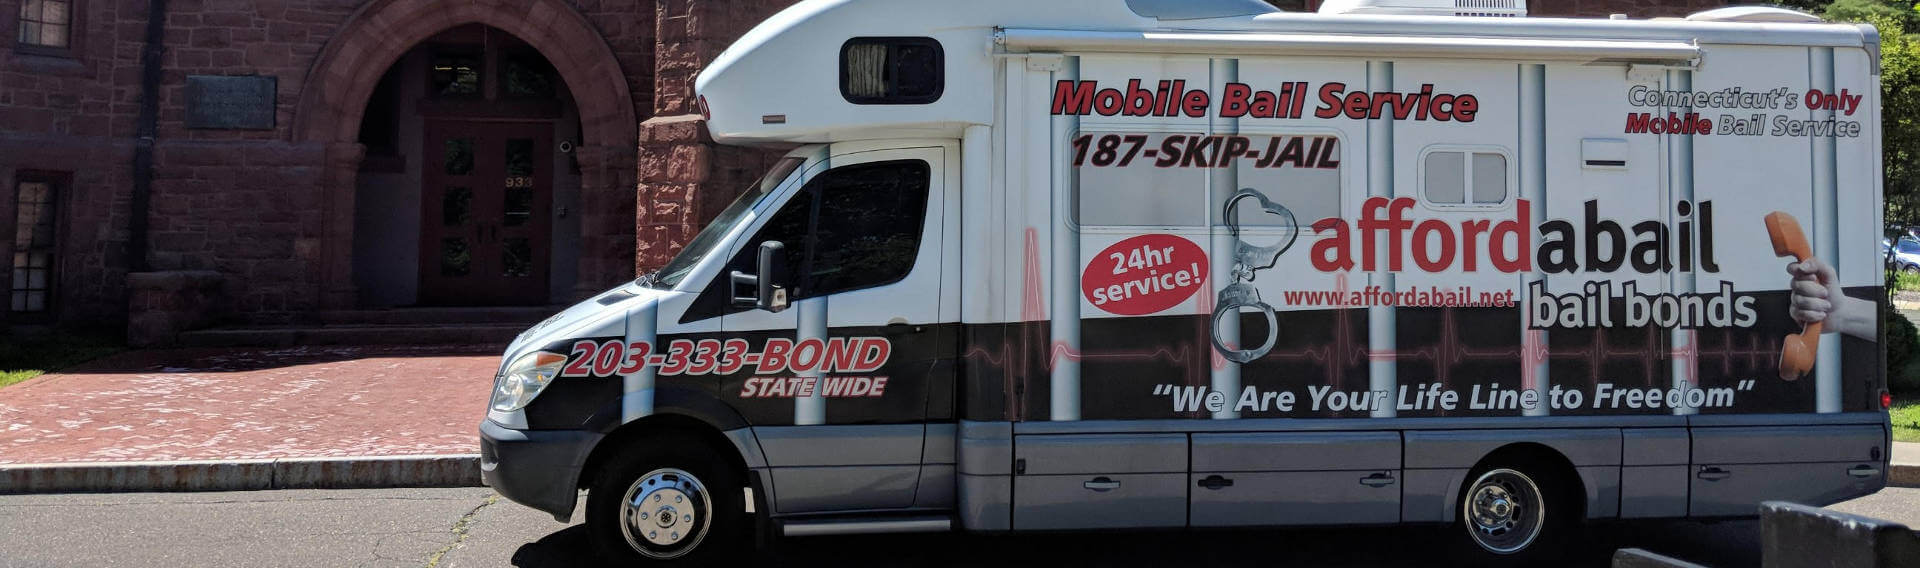 Mobile bail bonds service in Prospect CT